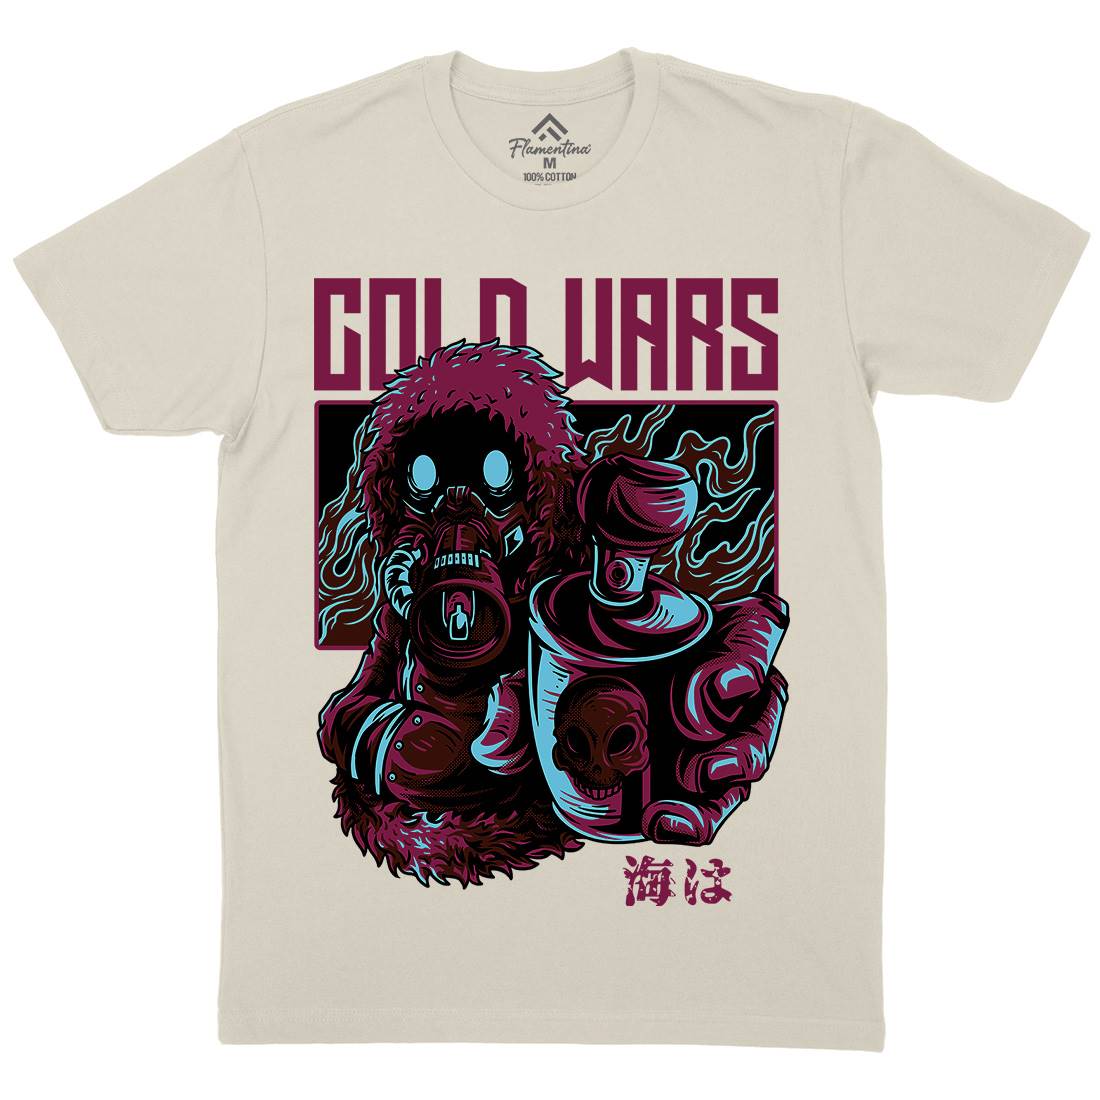 Cold Wars Mens Organic Crew Neck T-Shirt Graffiti D727